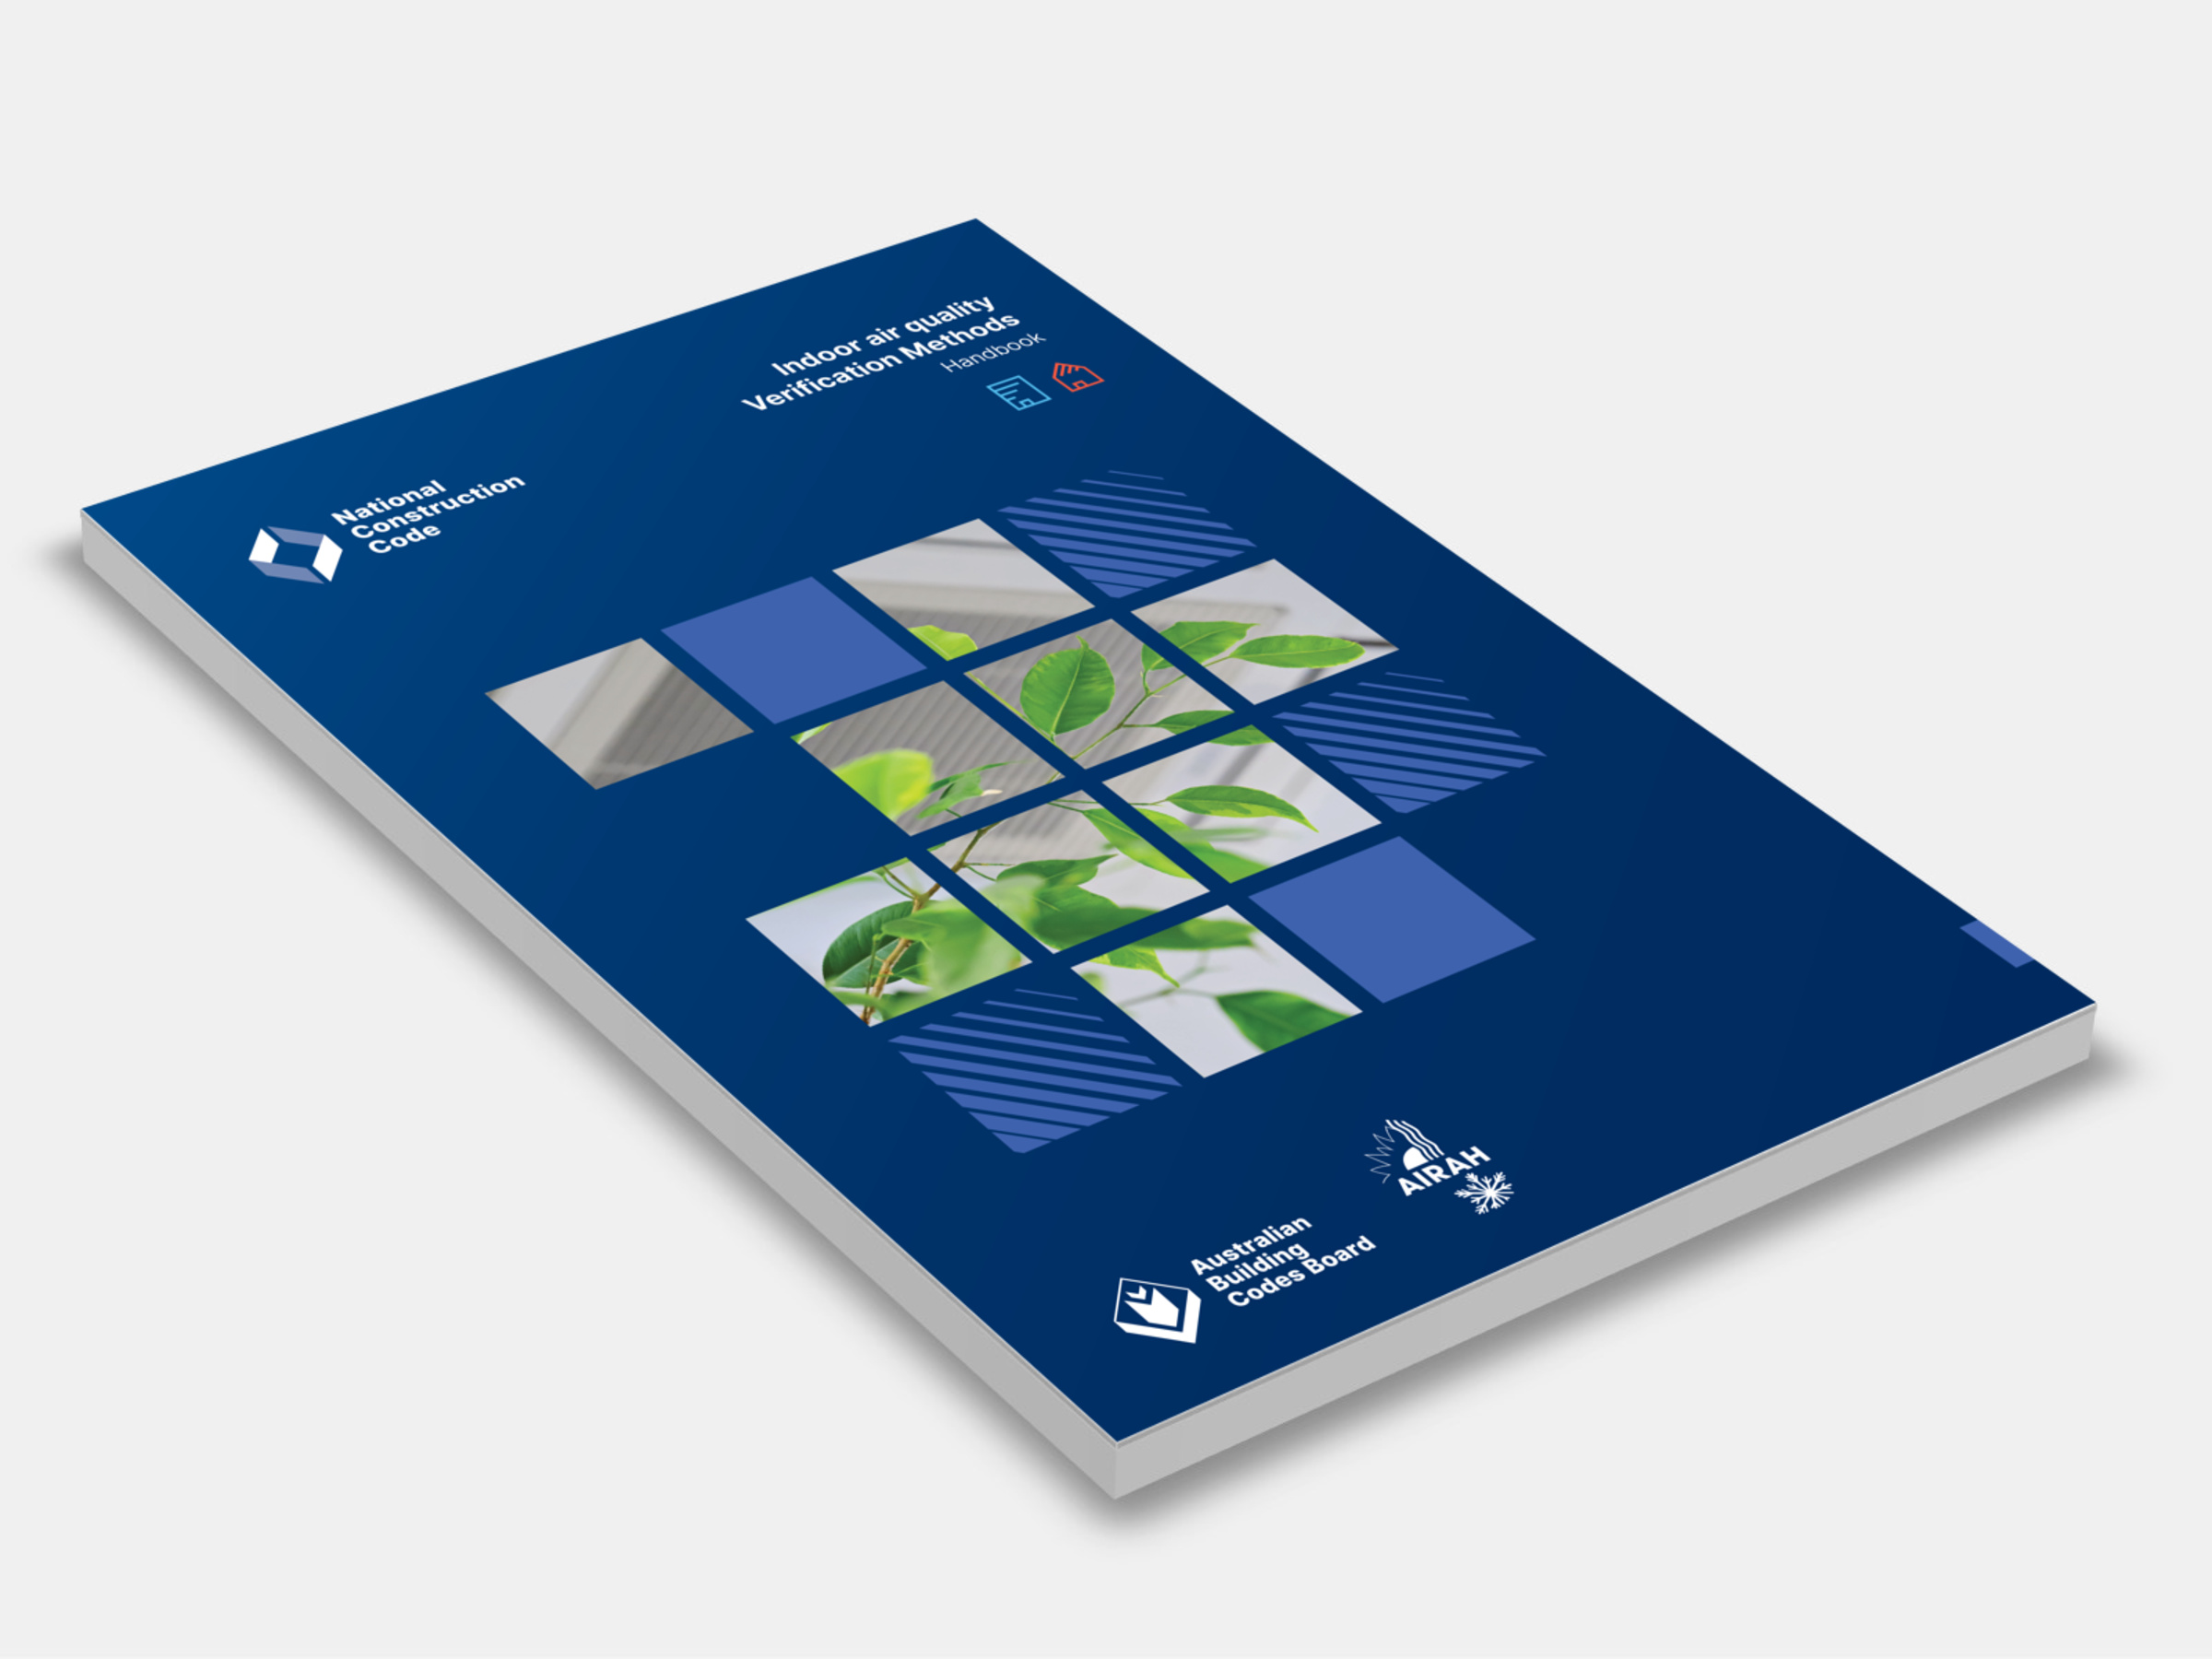 Indoor Air Quality Verification Methods Handbook 2016 cover